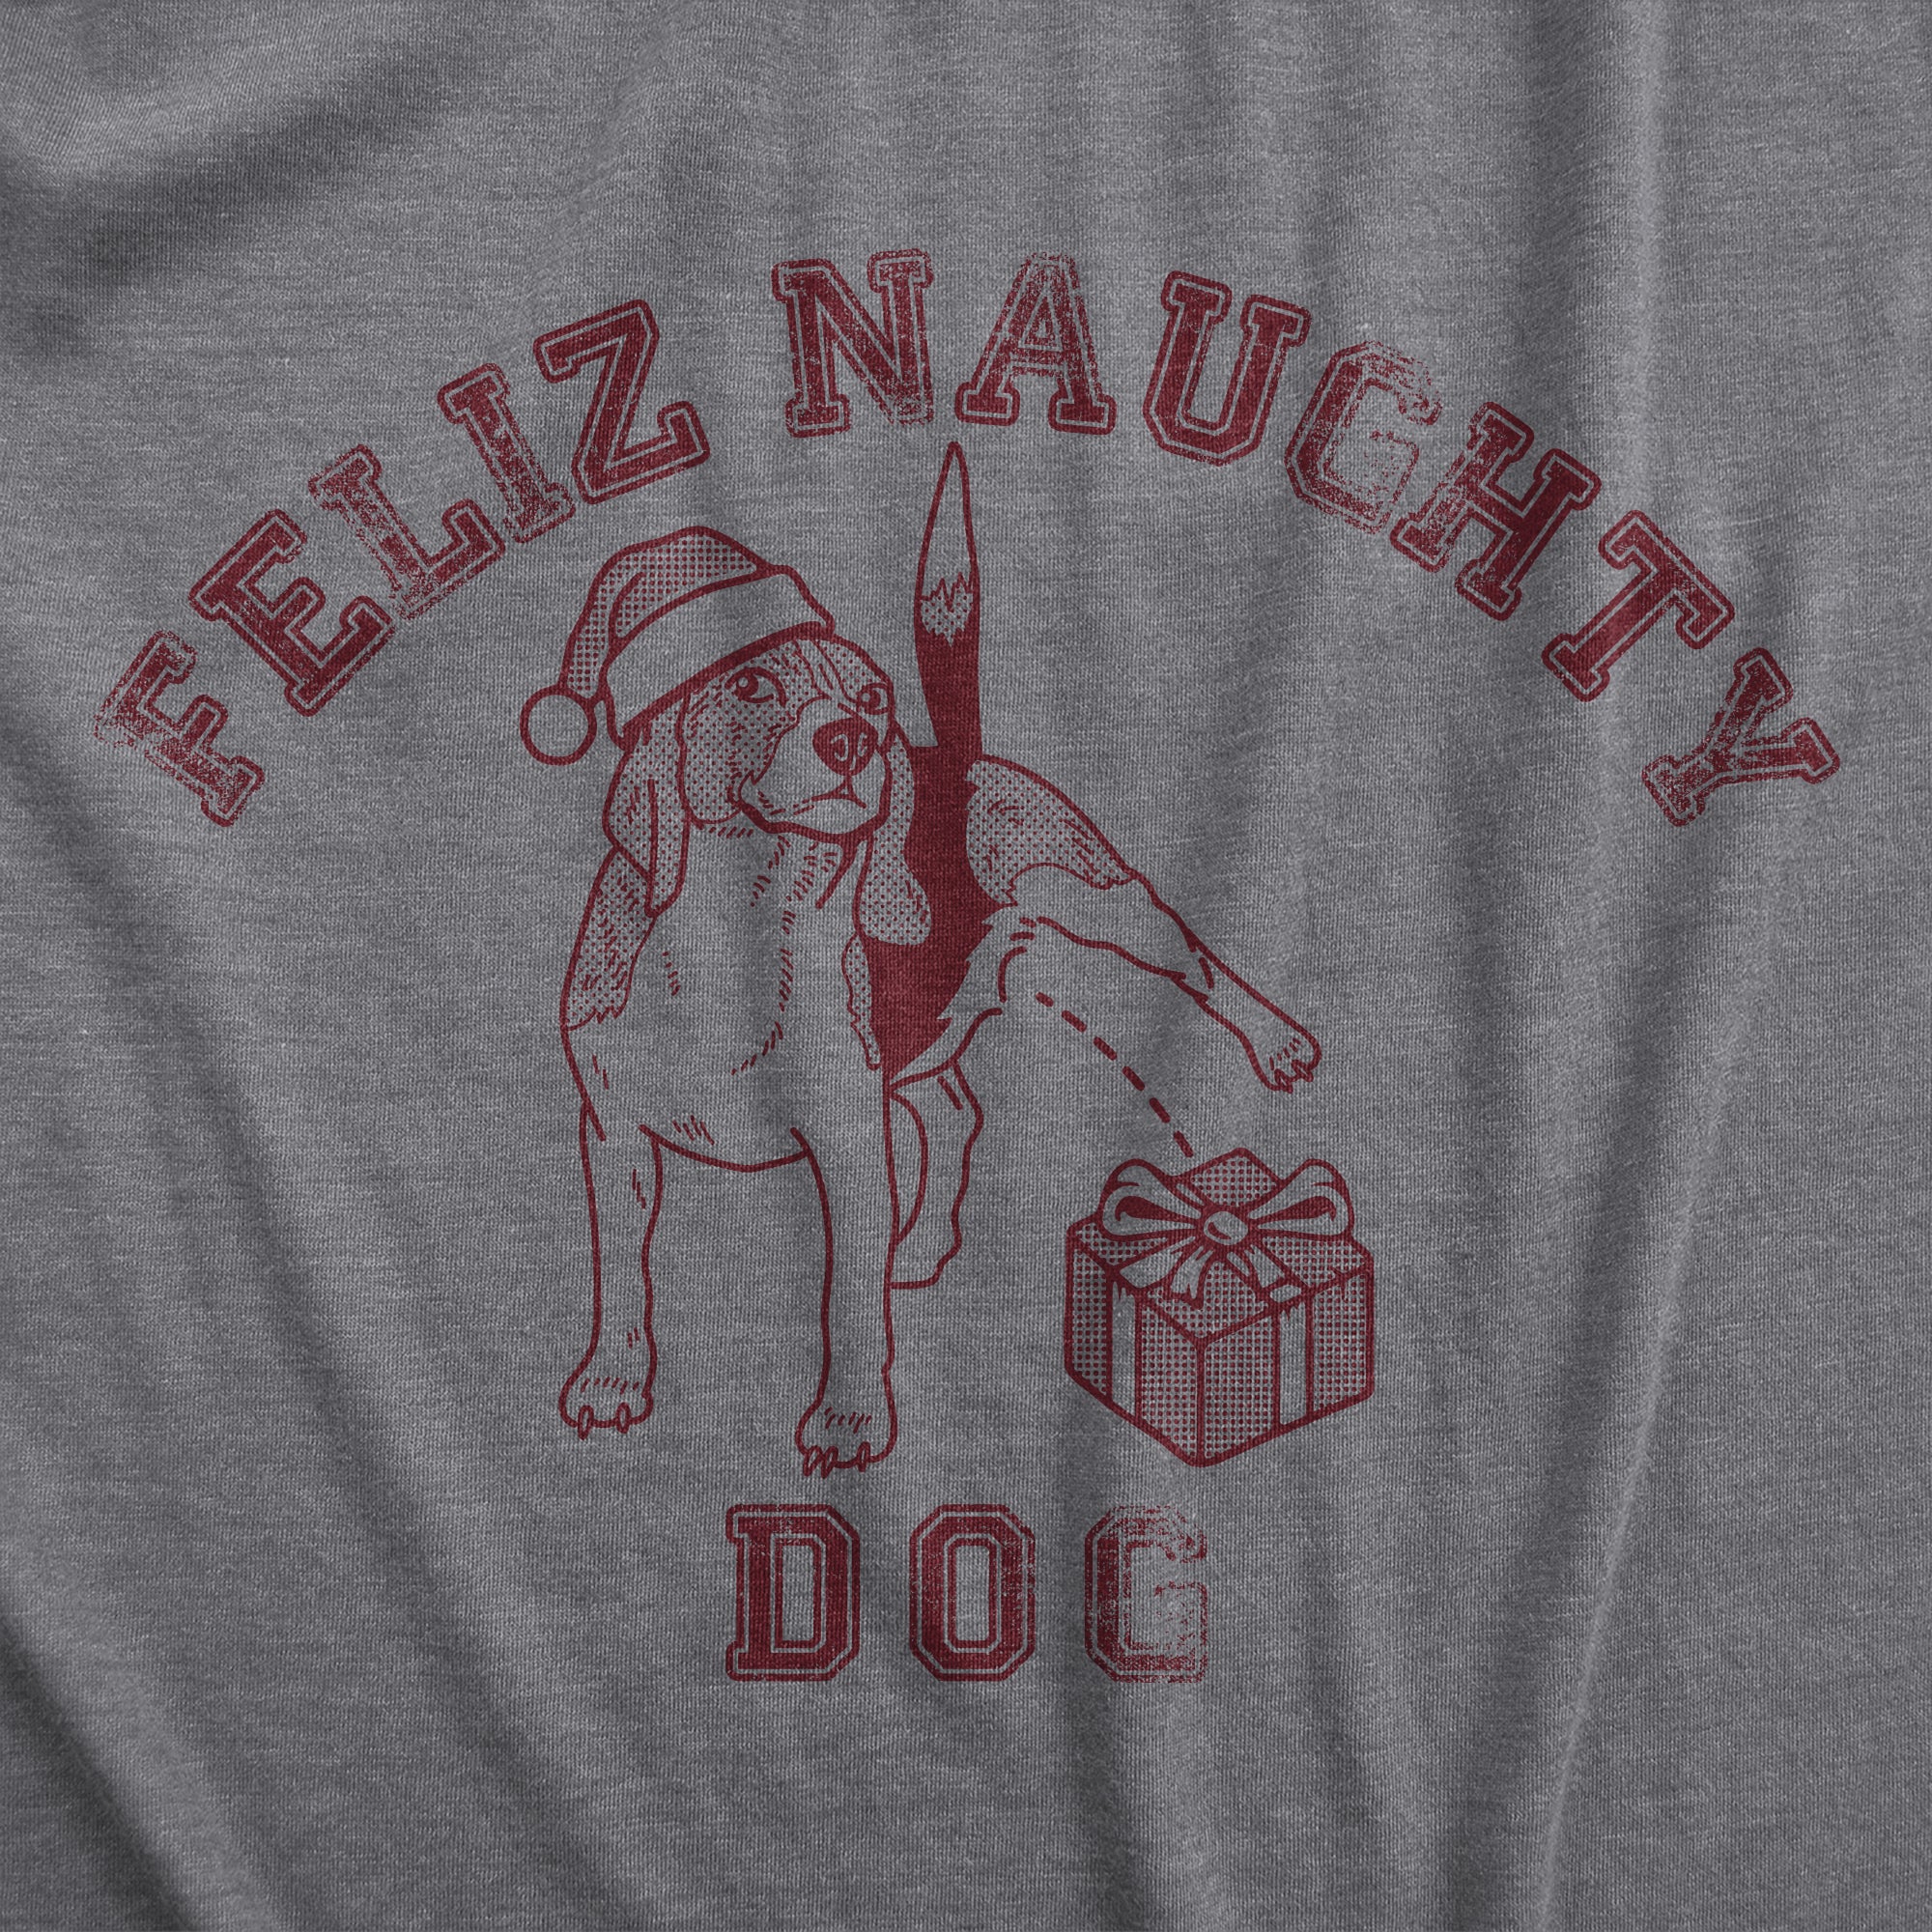 Funny Dark Heather Grey - NAUGHTY Feliz Naughty Dog Mens T Shirt Nerdy Christmas Dog Sarcastic Tee